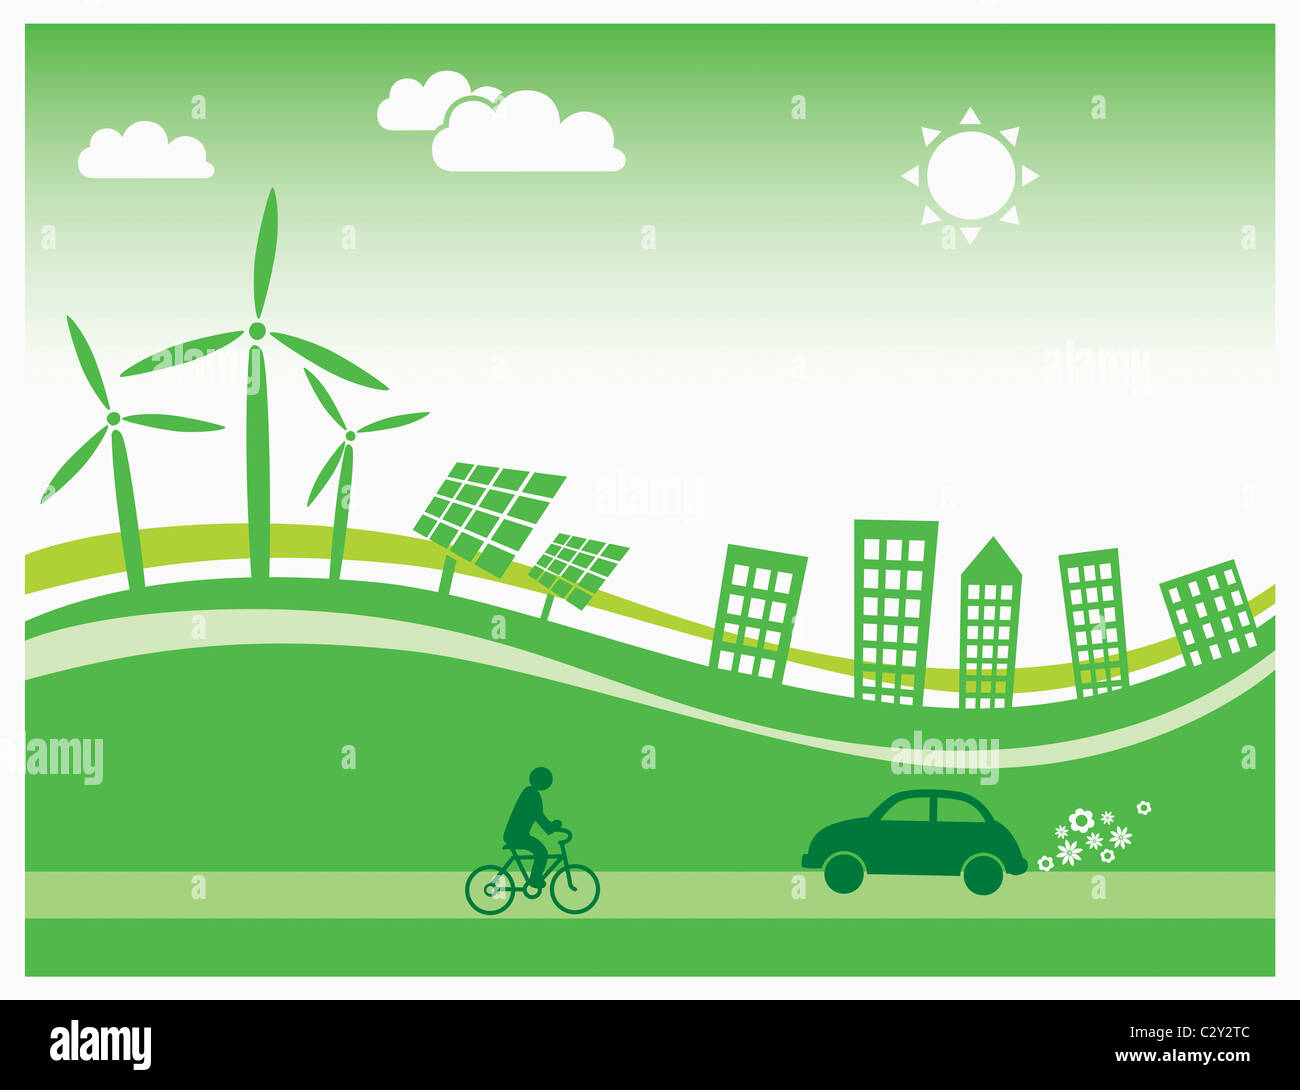 green eco friendly background Stock Photo - Alamy